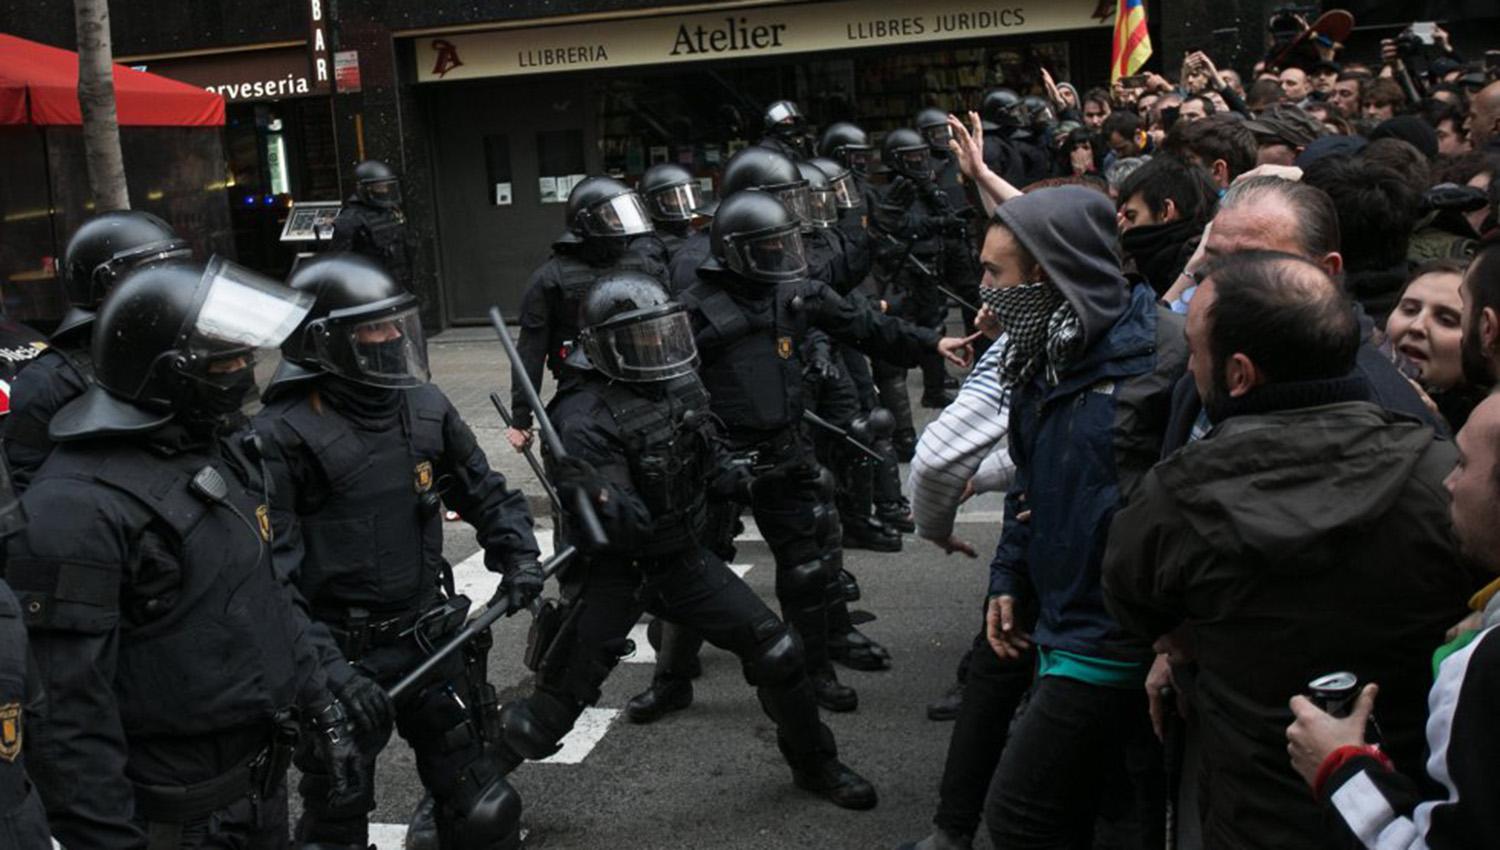 EN BARCELONA. Policías se enfrentaron con manifestantes que protestaron contra la detención de Puigdemont. FOTO TOMADA DE ELPAIS.COM